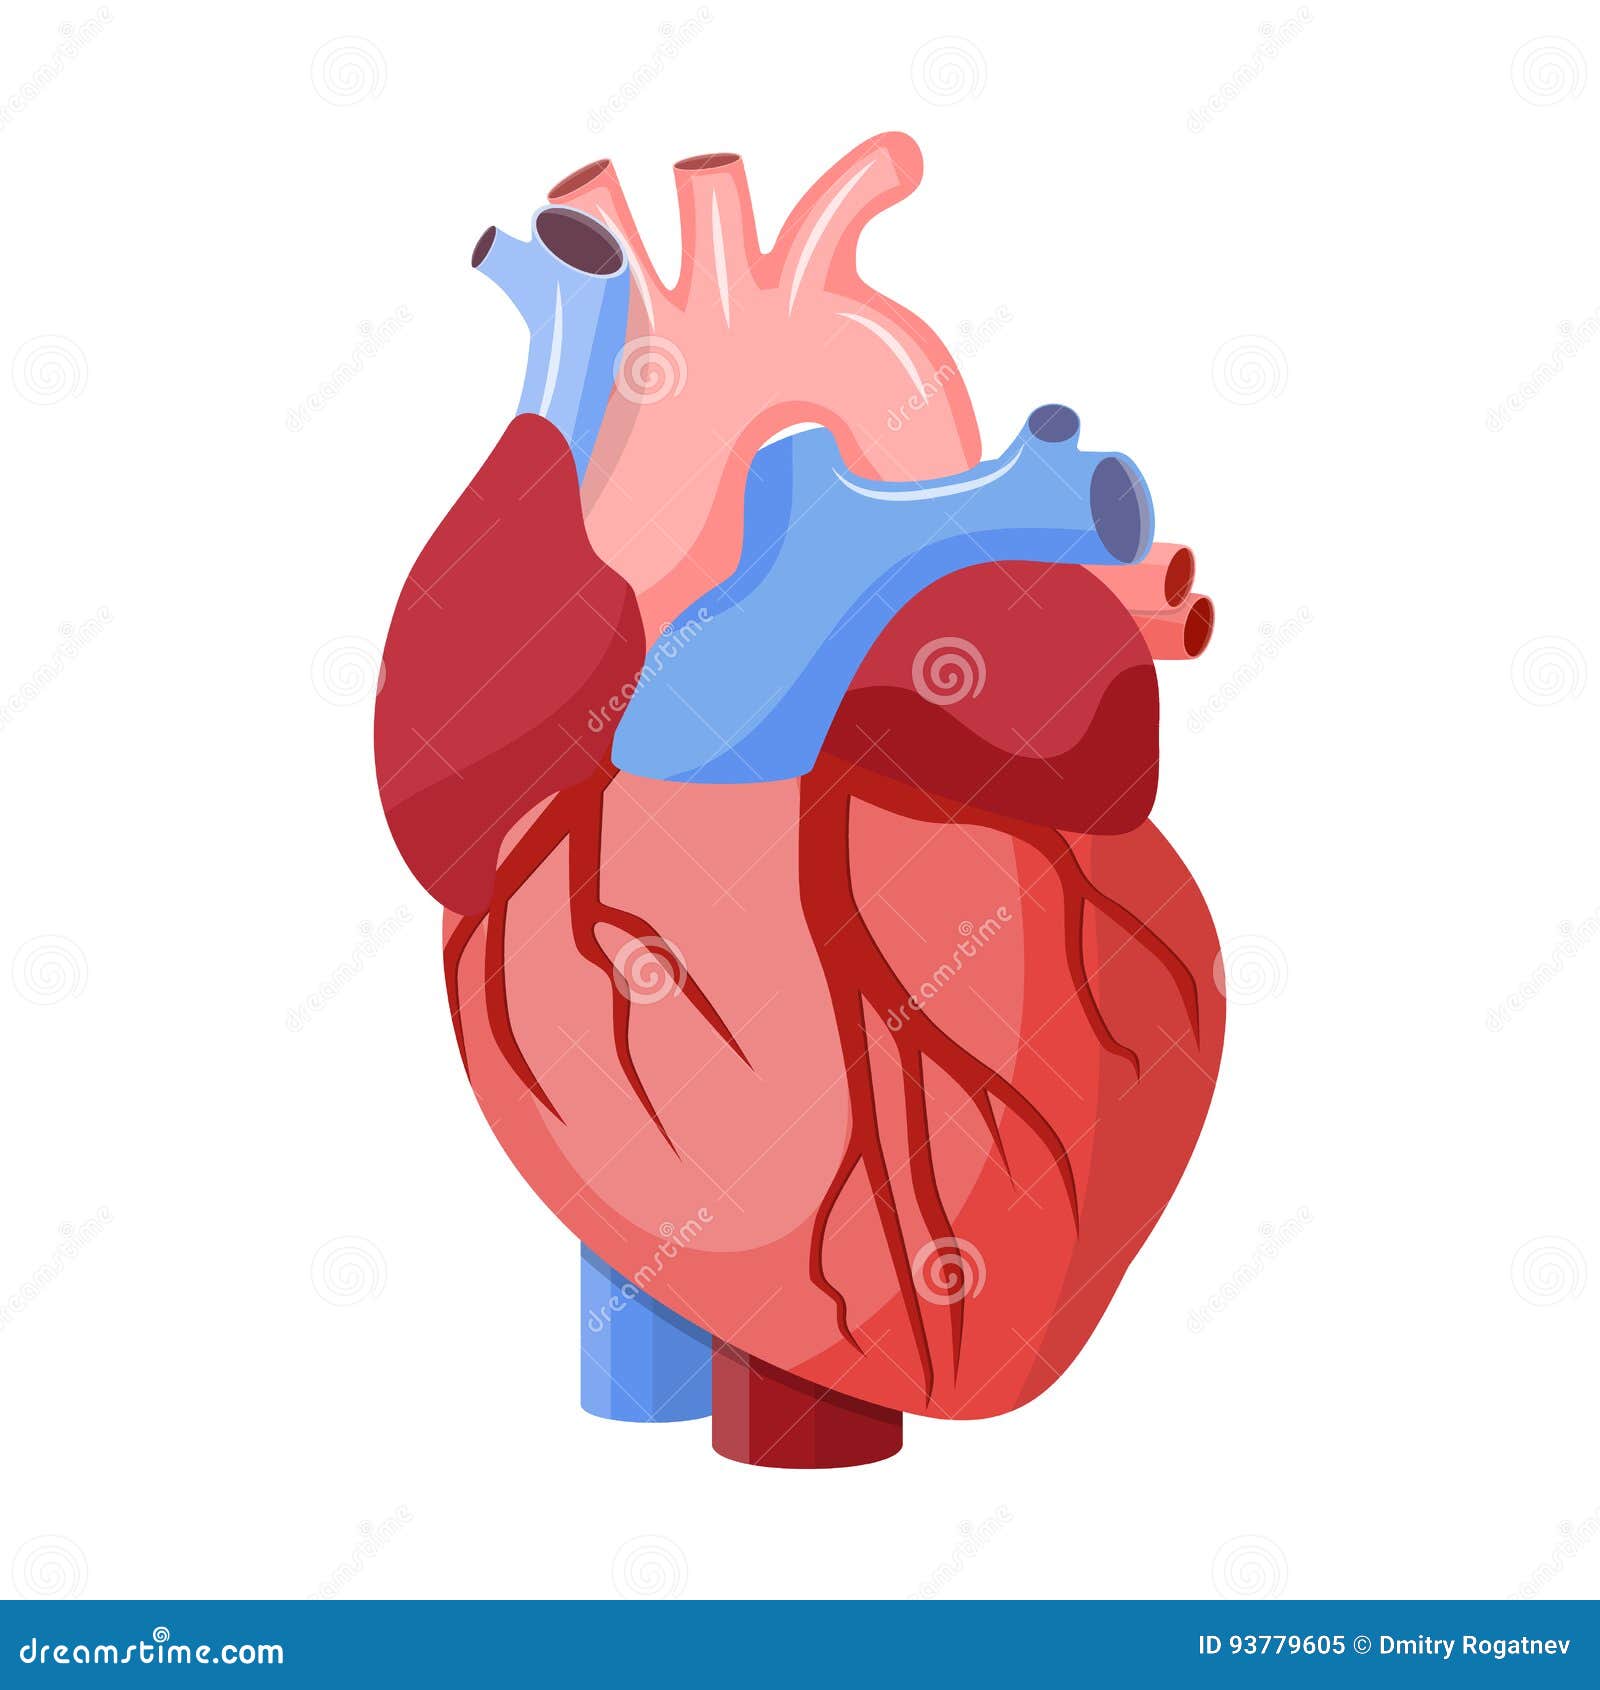 anatomical heart .